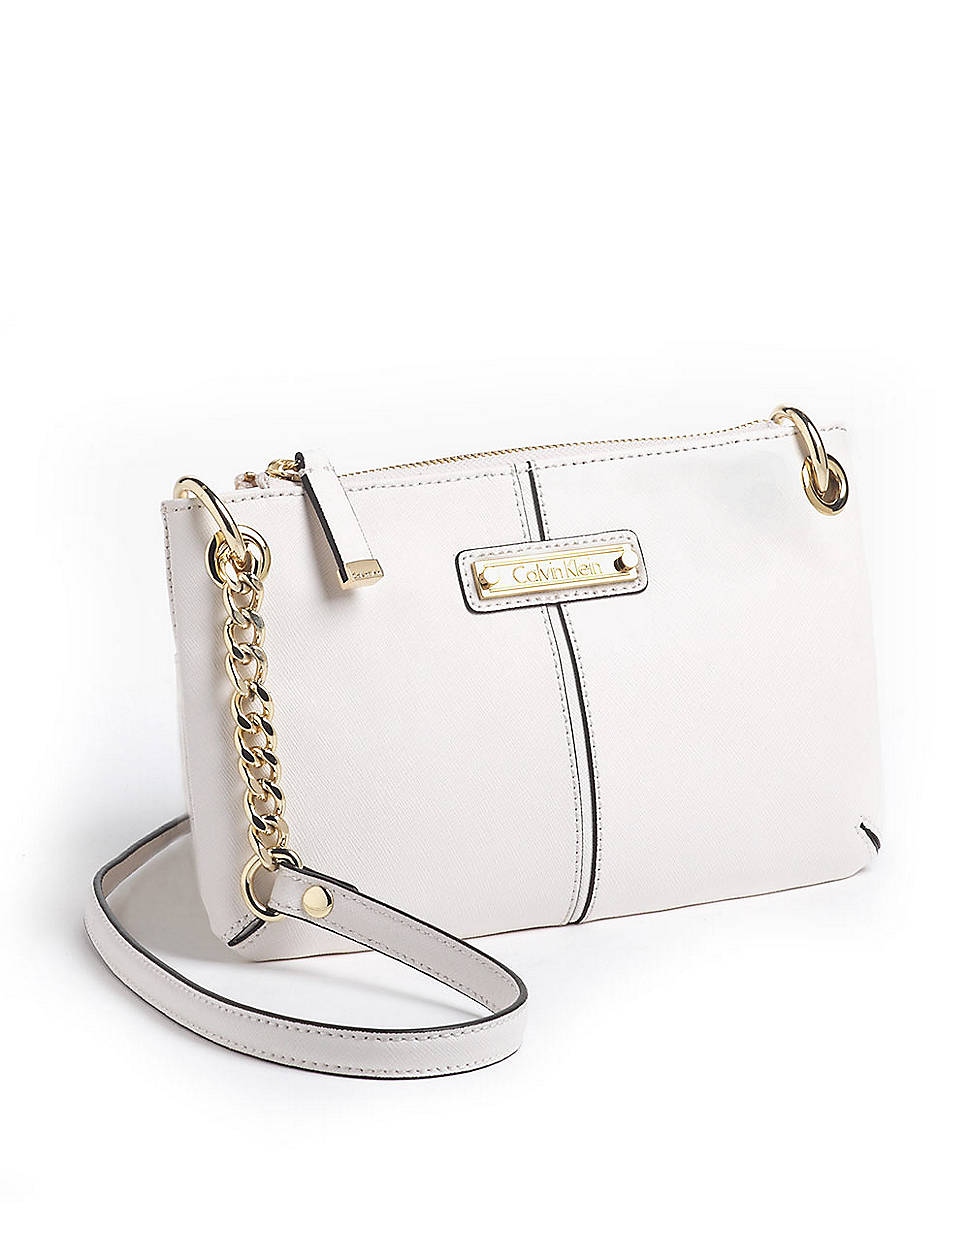 Calvin Klein Saffiano Leather Crossbody Bag in White | Lyst